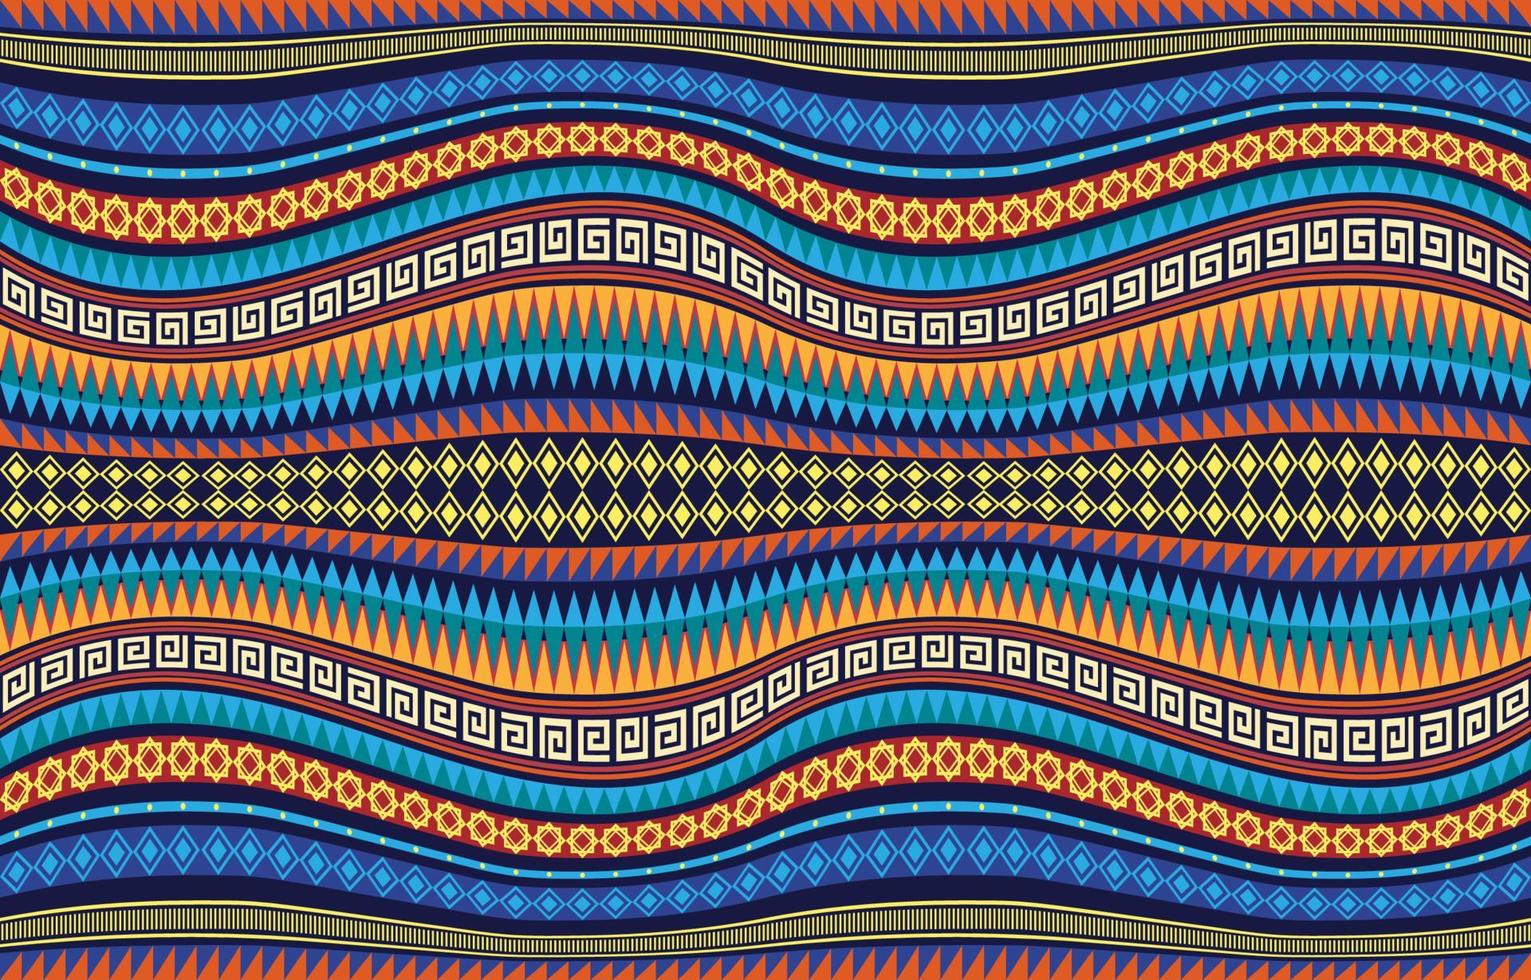 textil- mönster vågig diagonal kurva Ränder. etnisk geometrisk stam- inföding aztec arabesk tyg matta indisk arab afrikansk sömlös mönster. utsmyckad linje grafisk broderi stil. vektor